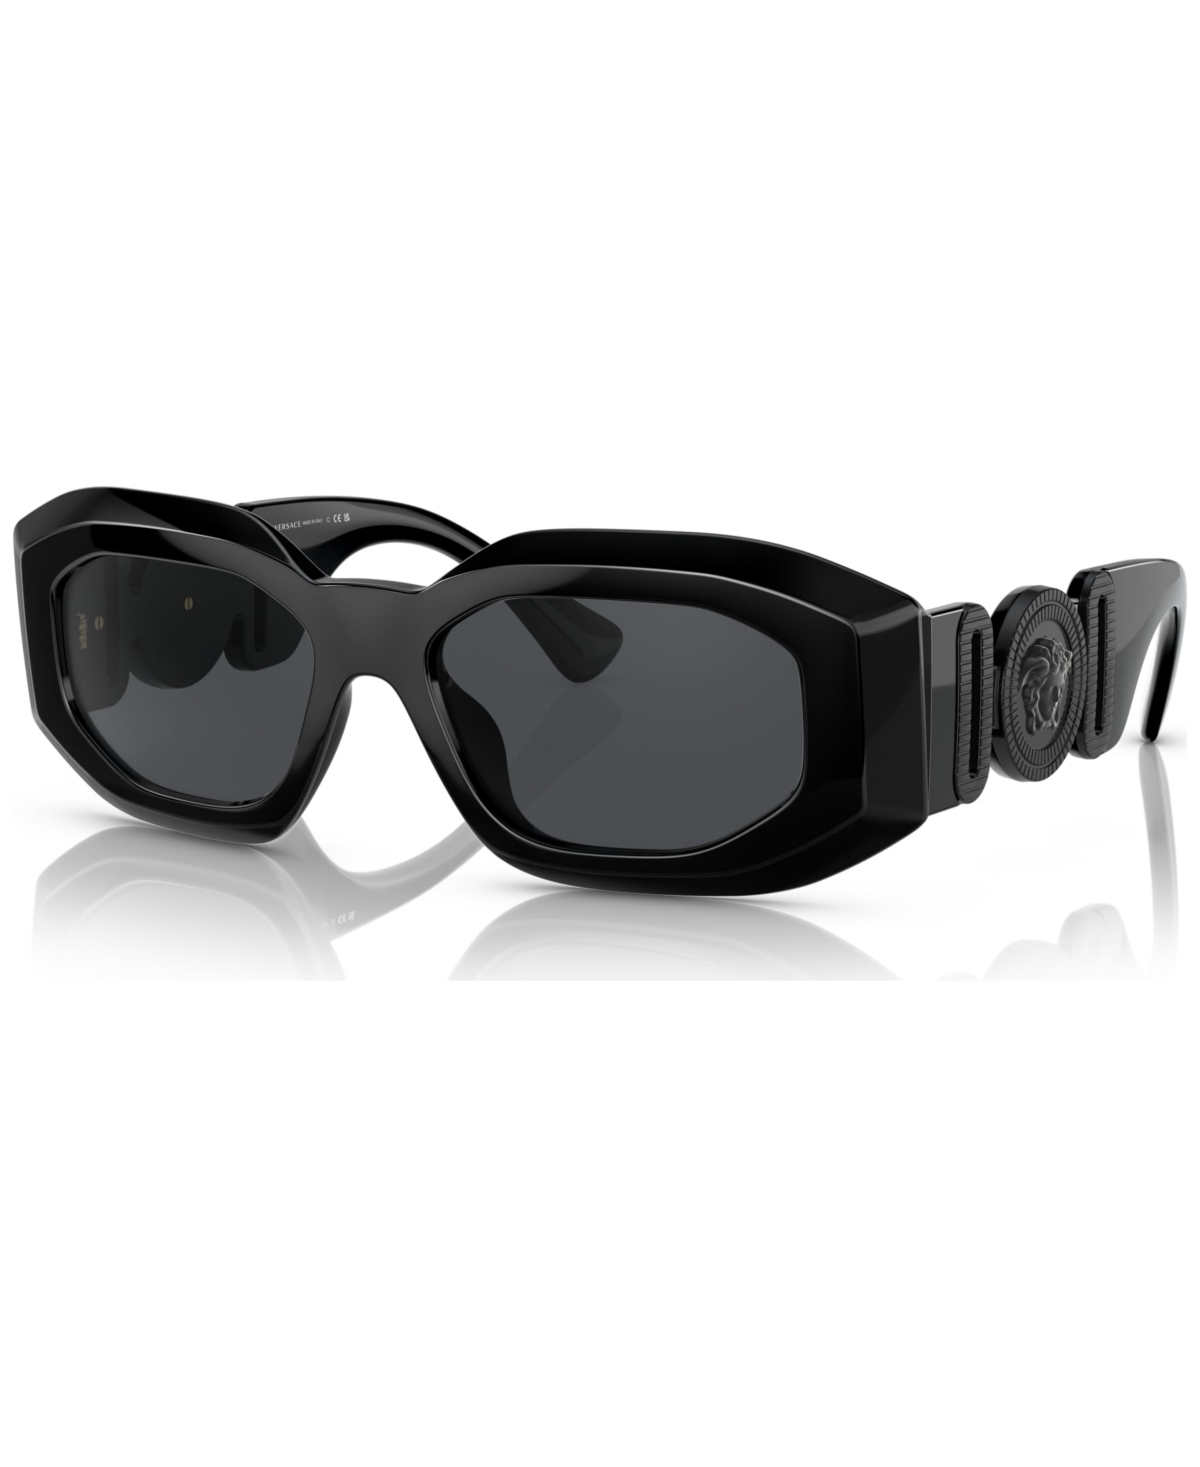 Men's Sunglasses, VE4425U54-x 53 - Black